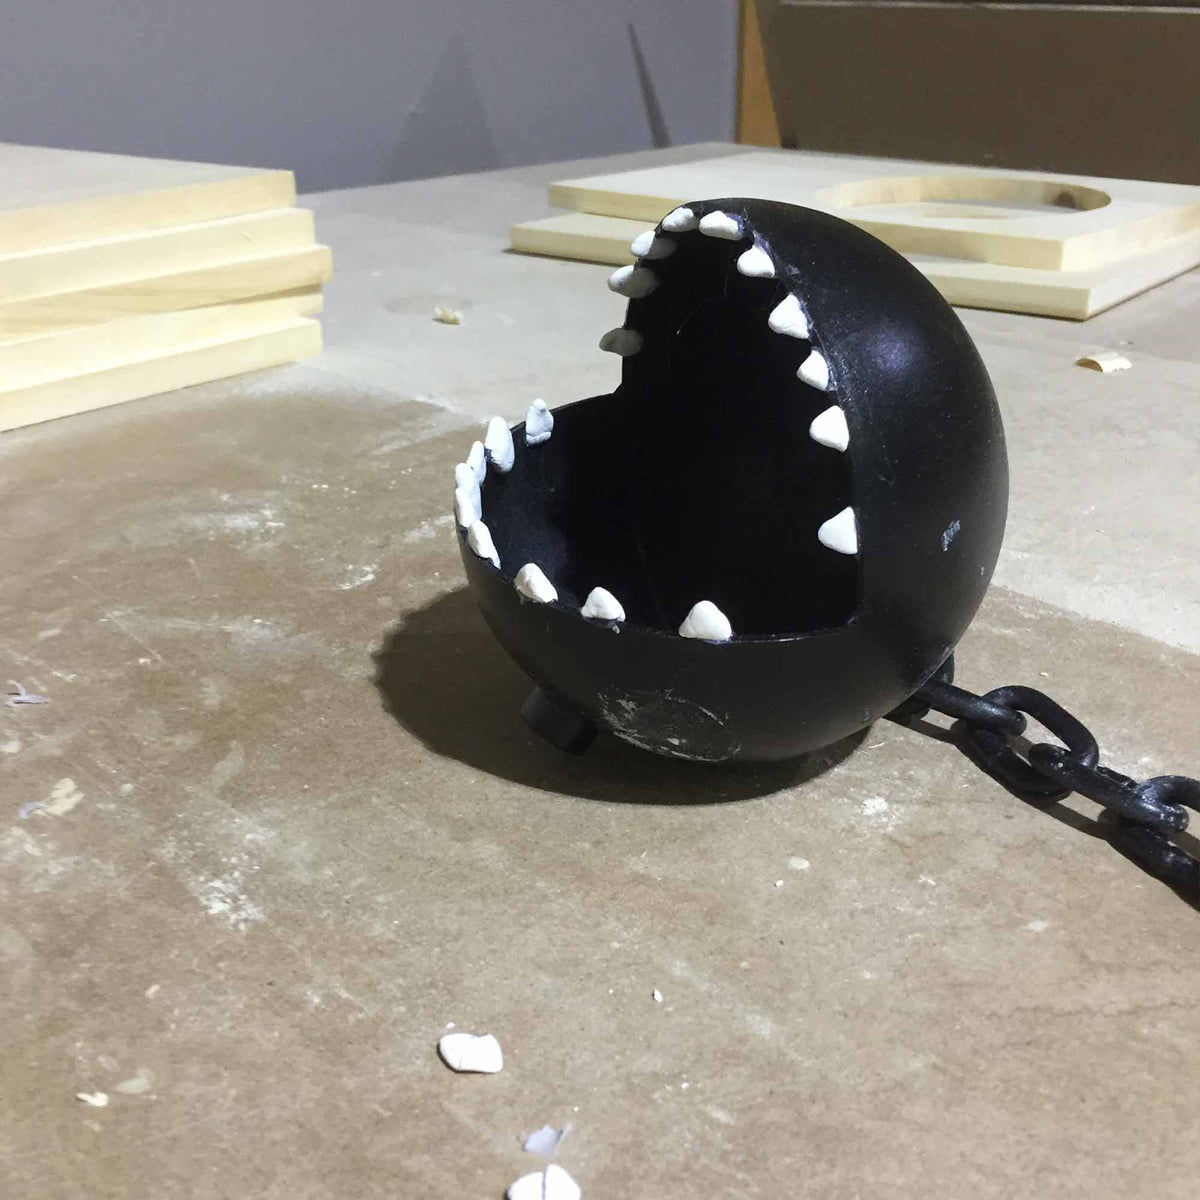 metal sphere with claw teeth made to look like chain chomp